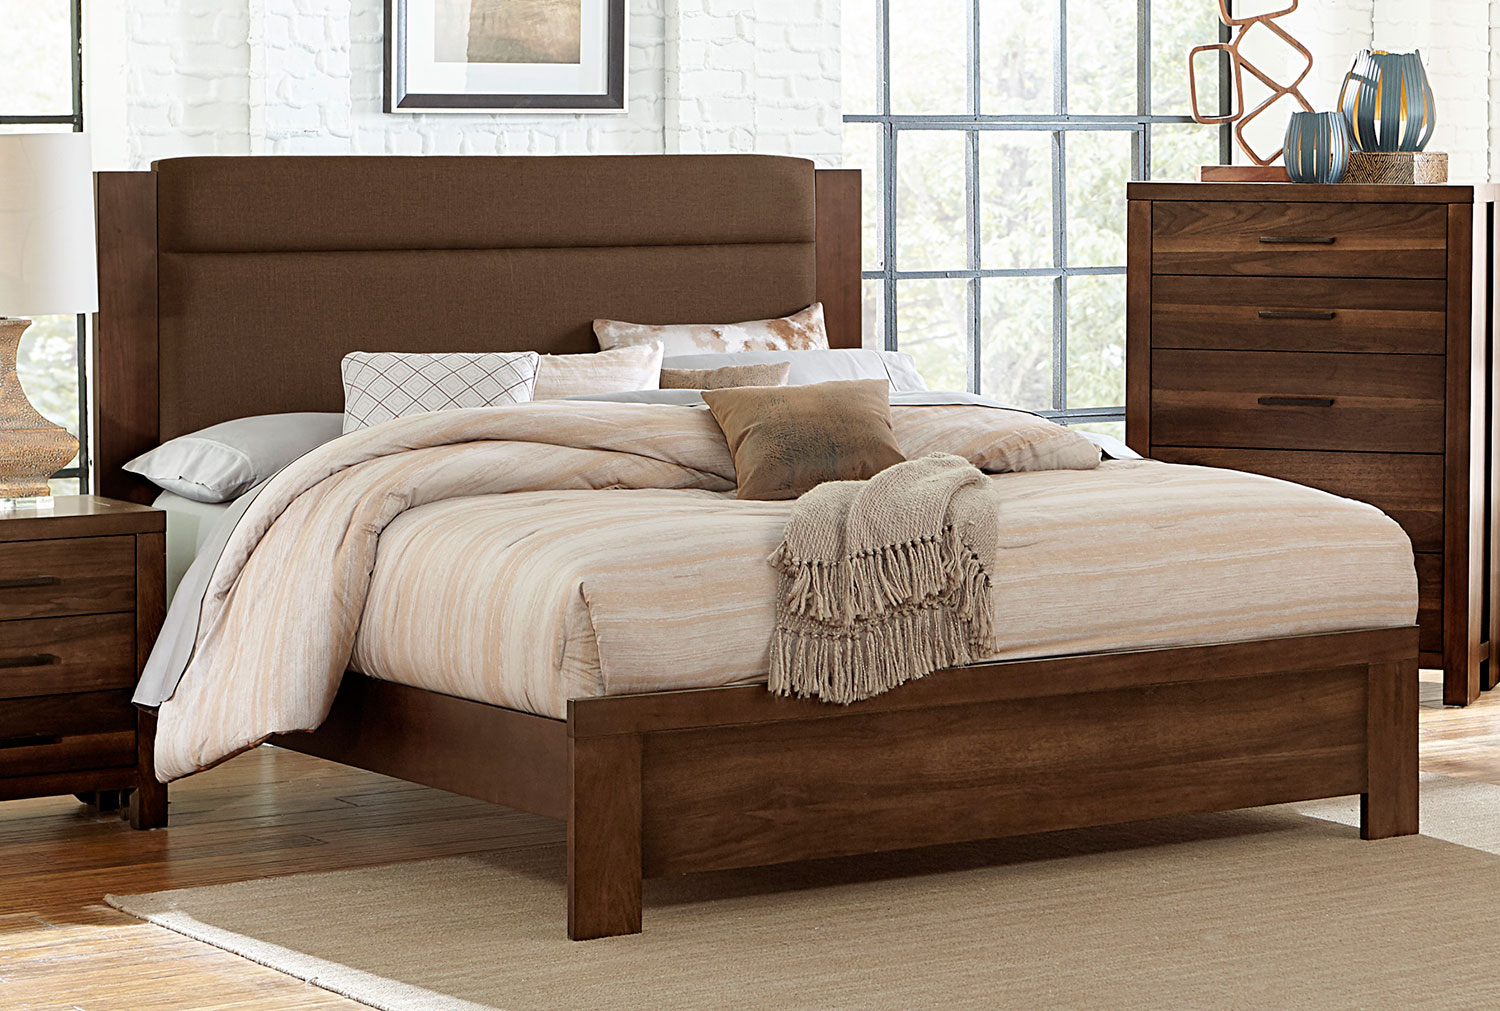 Homelegance Sedley Upholstered Bed - Walnut